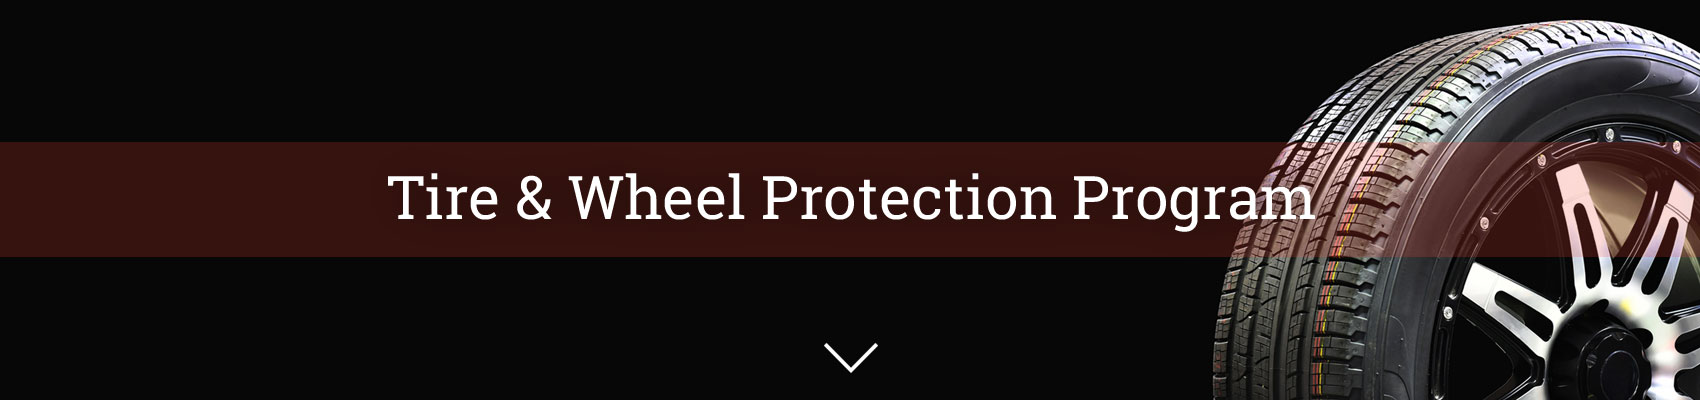 Tire & Wheel Protection Program